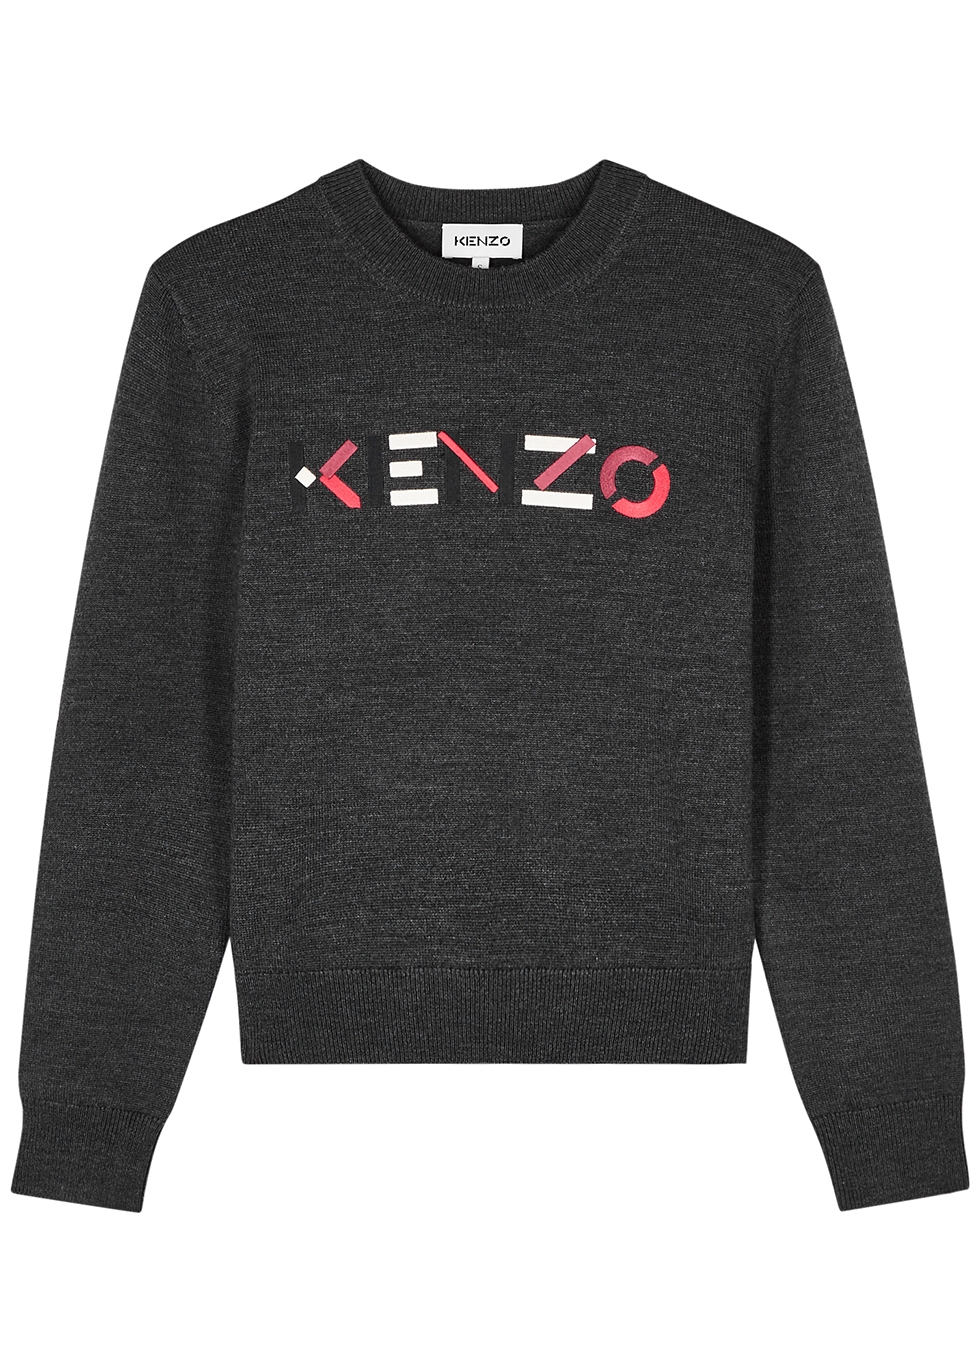 kenzo black and white jumper